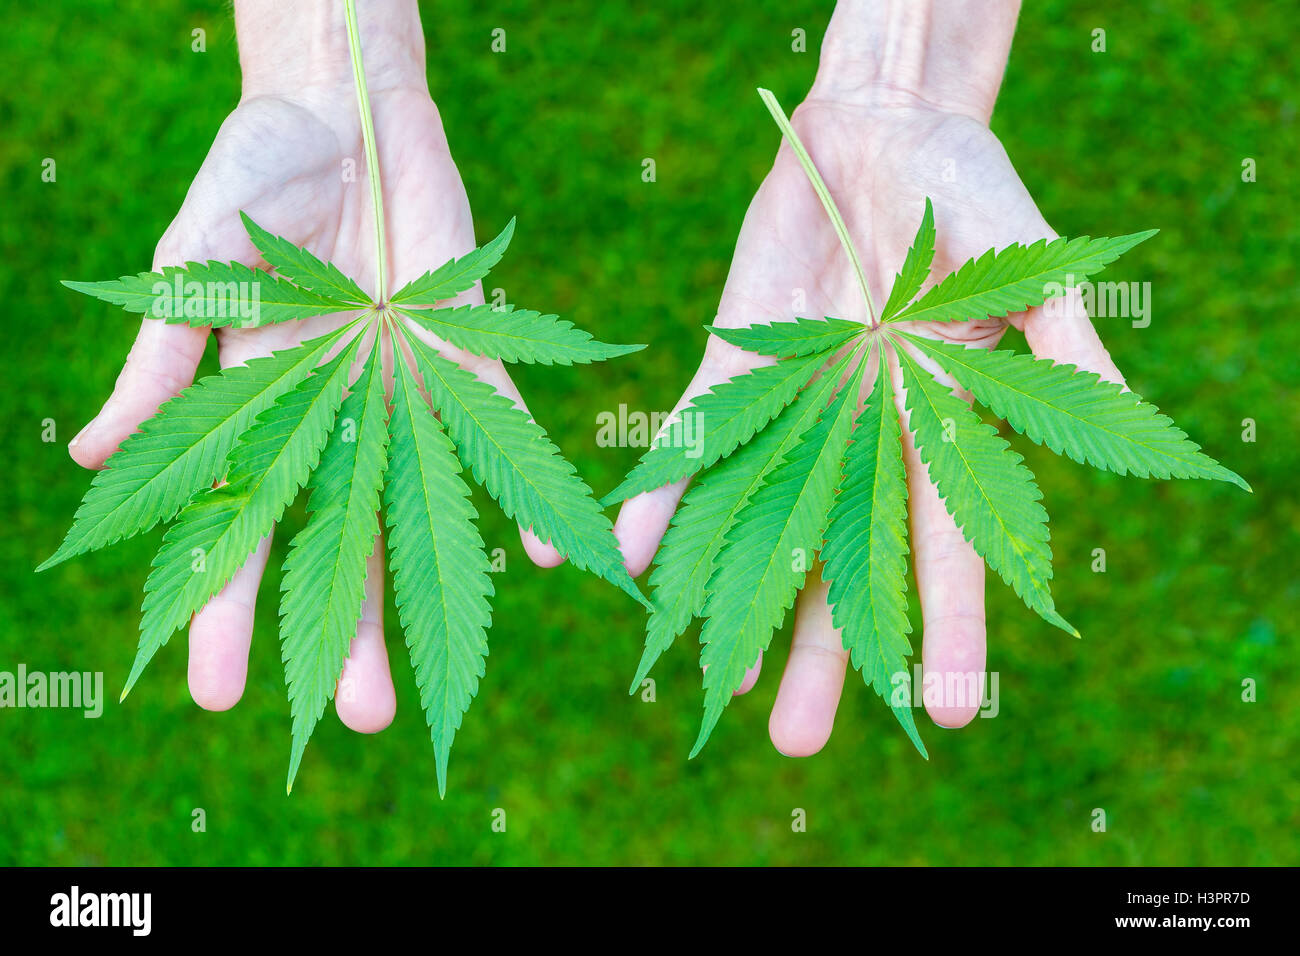 Due mani di foglie di cannabis al di sopra di erba verde Foto Stock